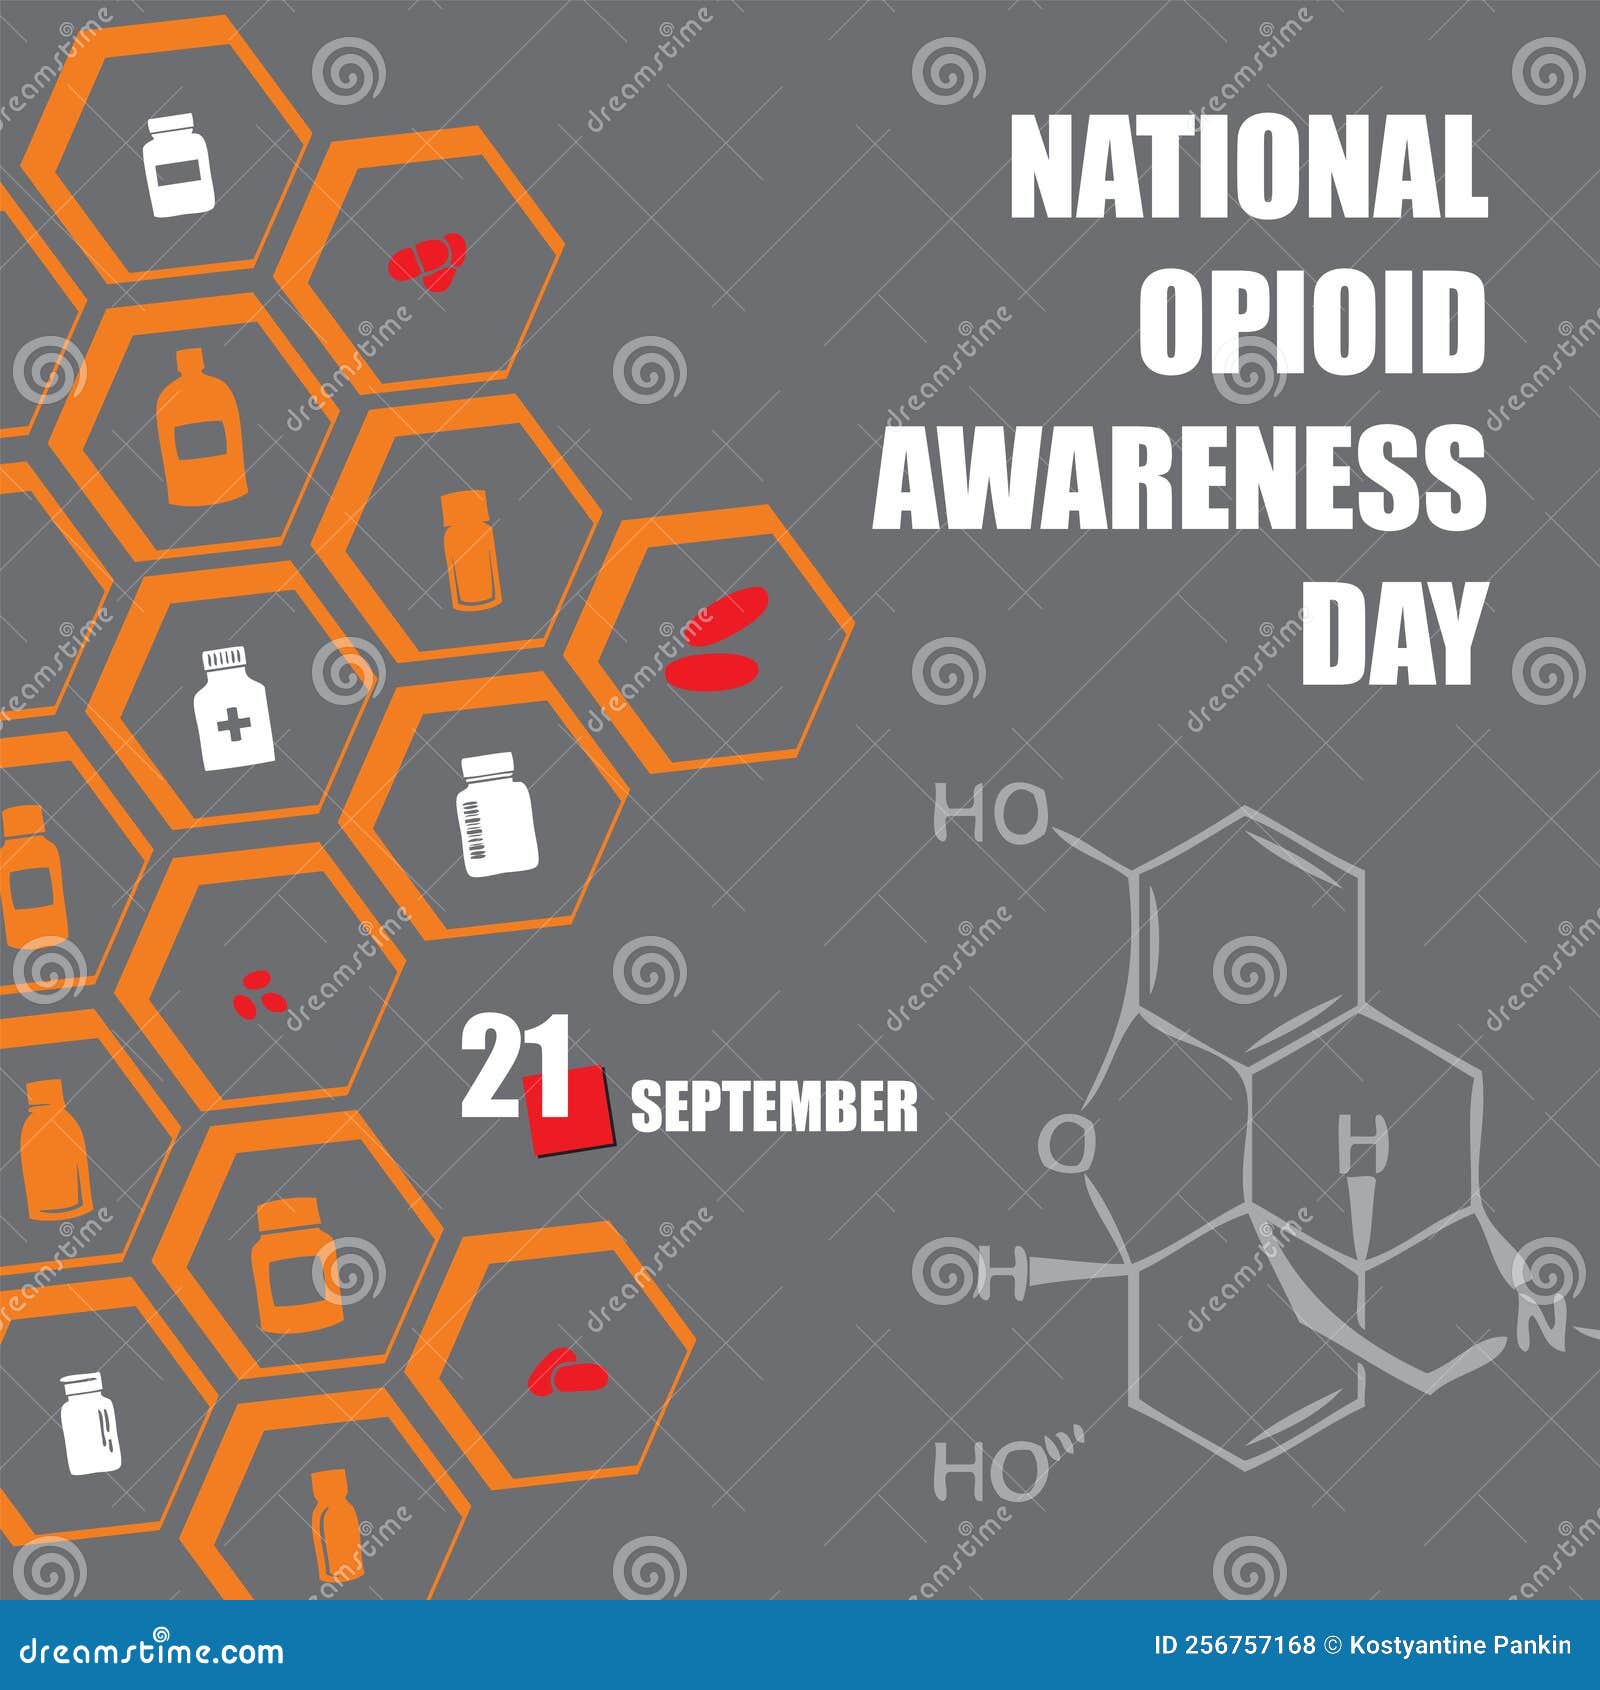 National Opioid Awareness Day Stock Vector Illustration of banner